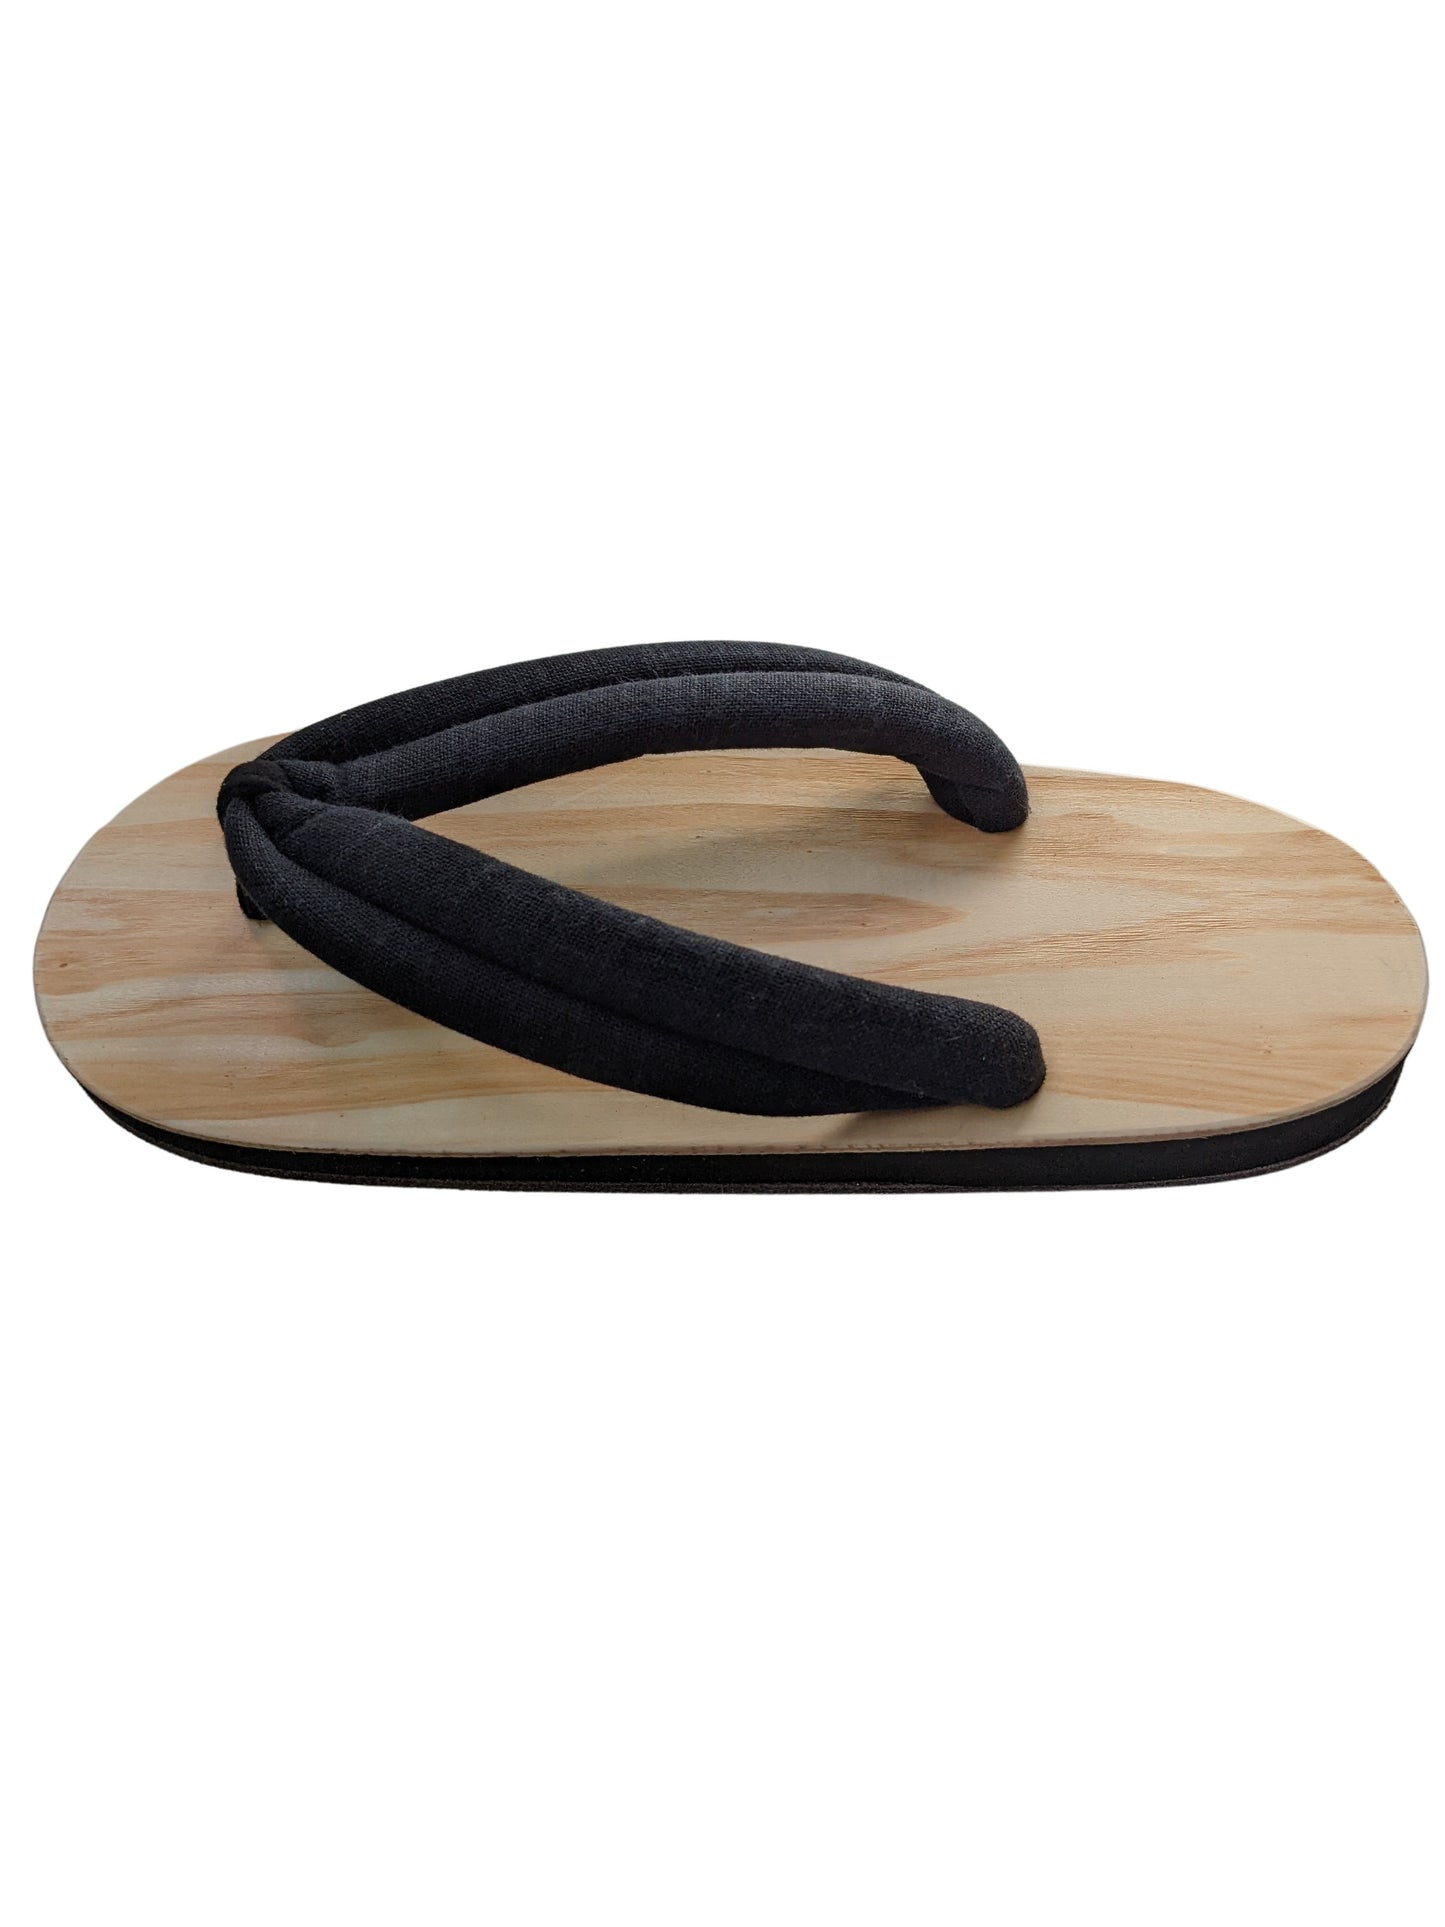 Wood summer Indoor slippers Geta Japanese Slippers YORU [Indoor]